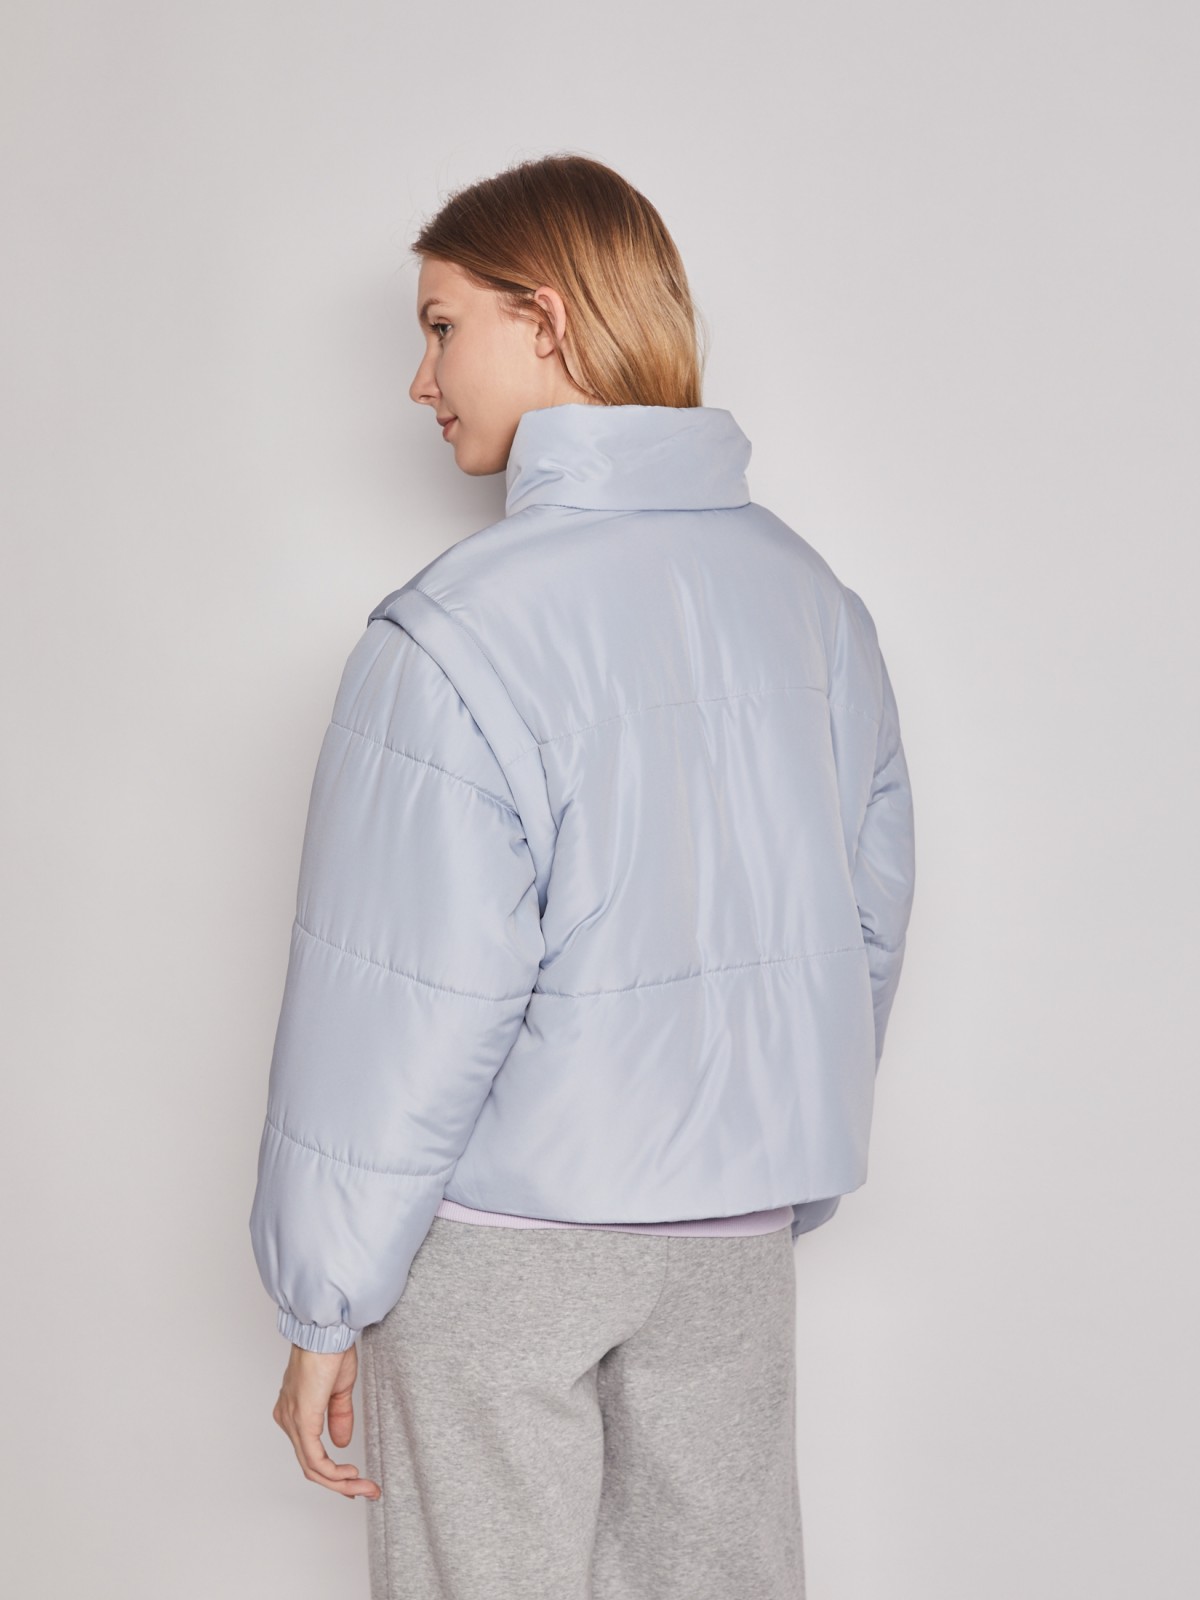 Короткая дутая куртка Oversize zolla 022125150254, цвет светло-голубой, размер XS - фото 3